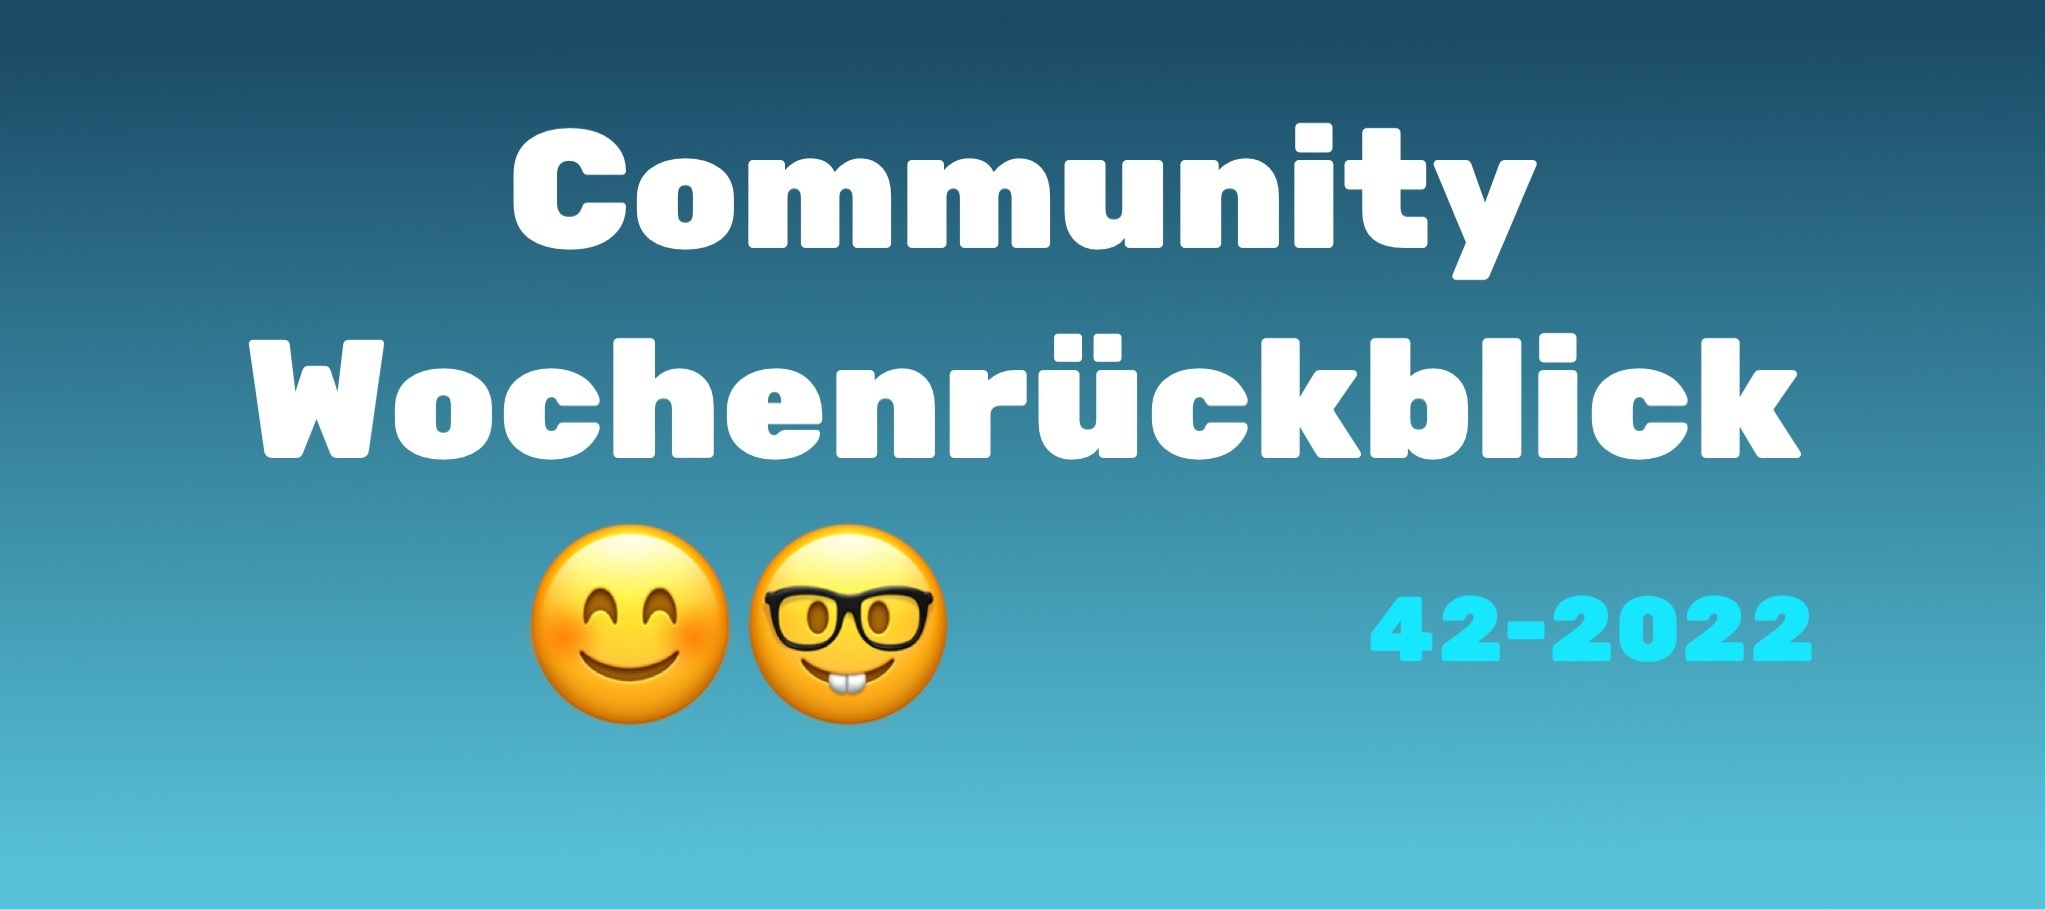 Community Wochenrückblick #42/2022